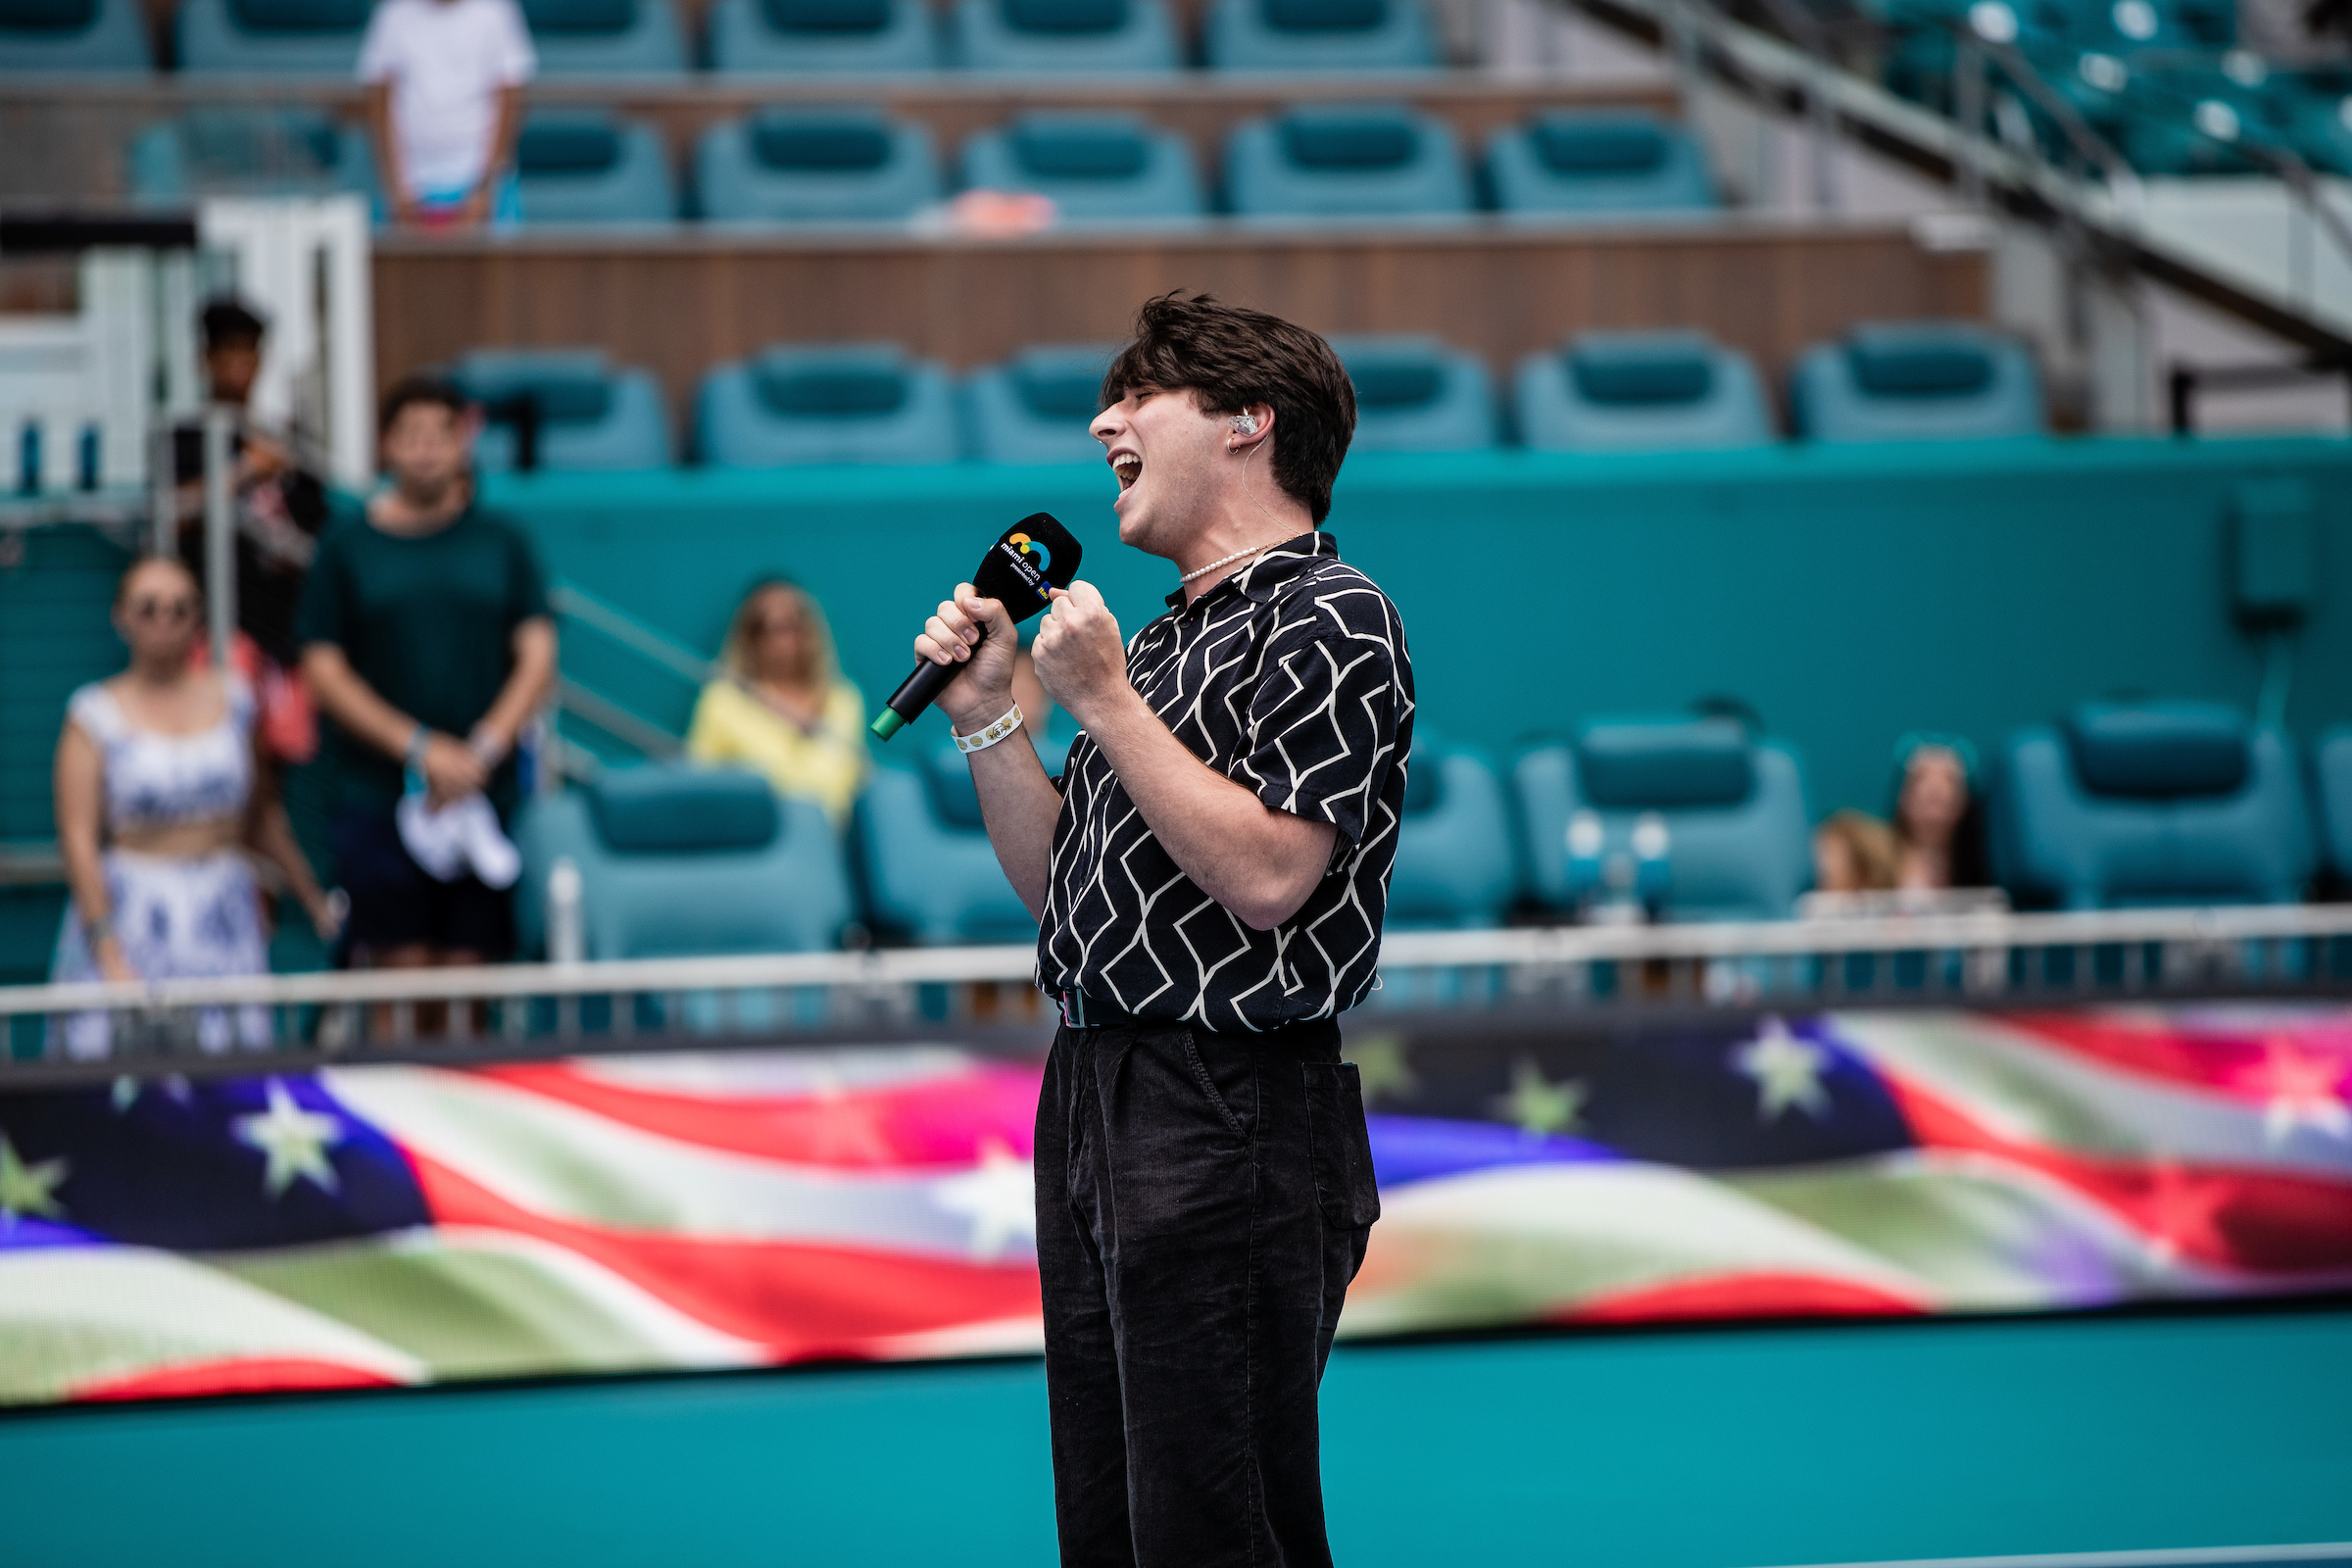 Kique sings the National Anthem prior to the 2023 Miami Open Women's Singles Championship match at Hard Rock Stadium, Miami Gardens, Florida.